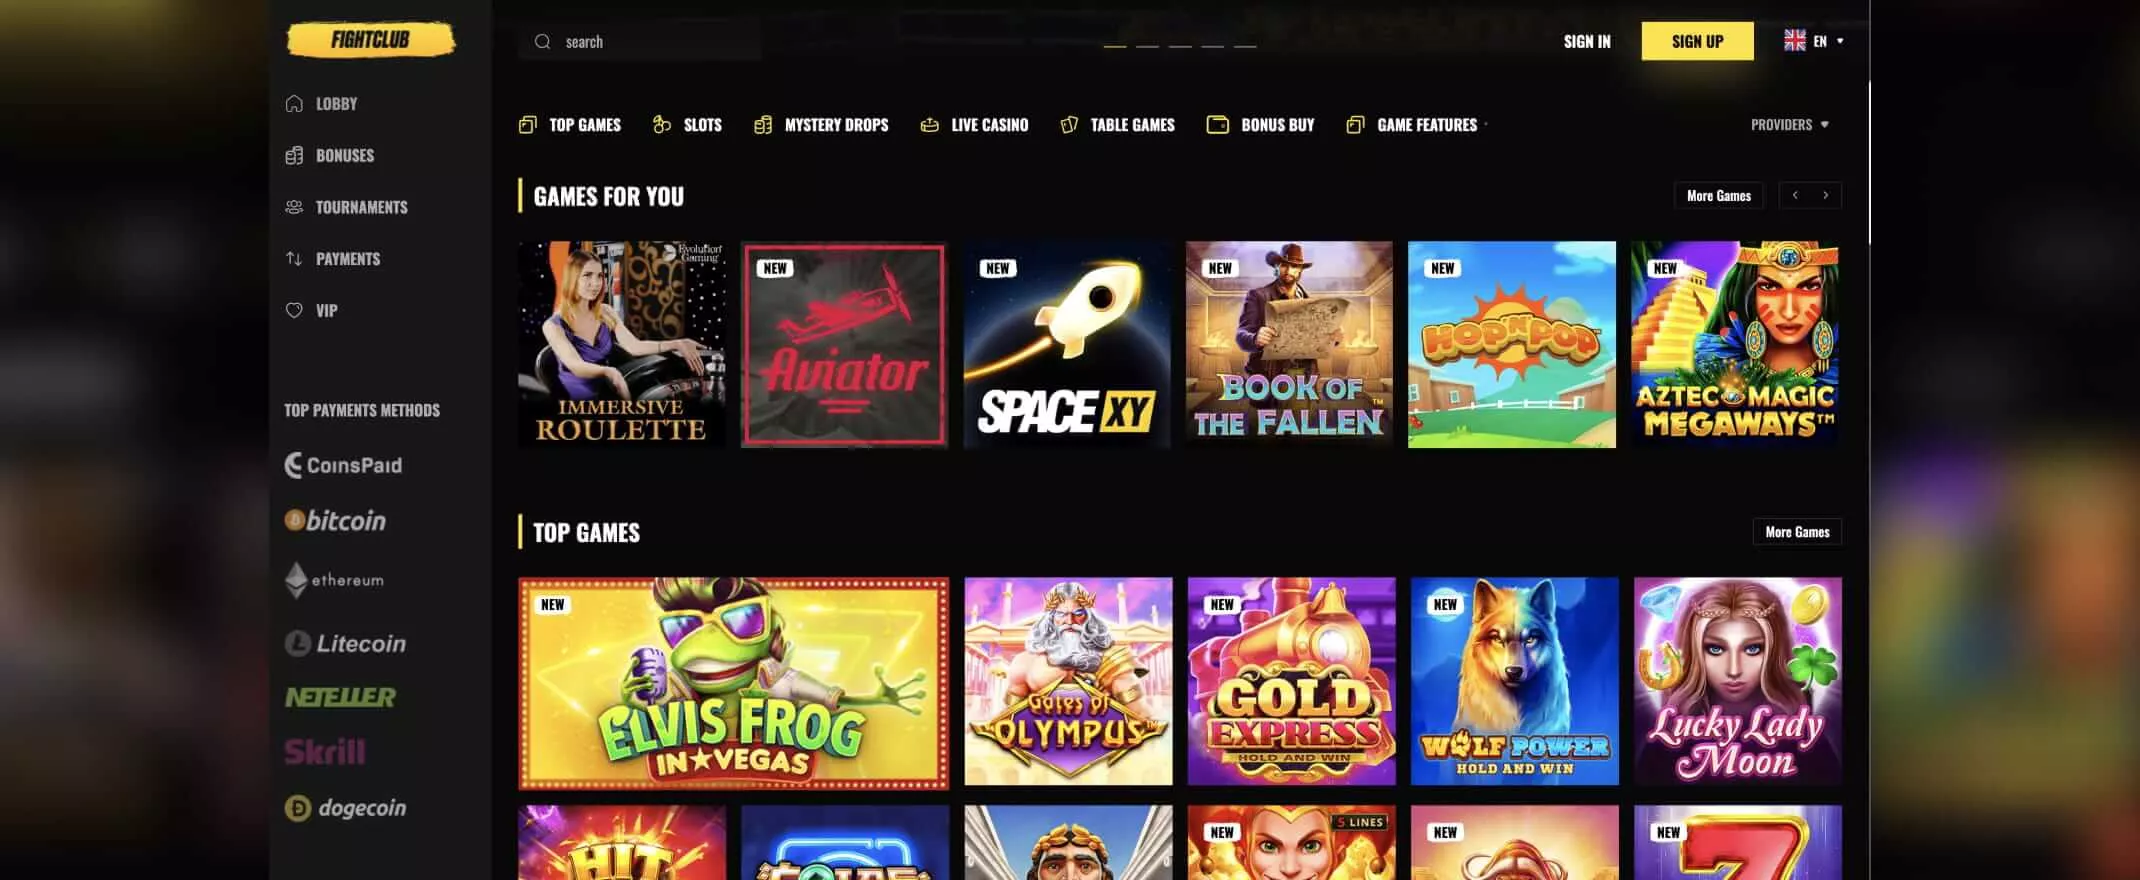 Fight Club Casino screenshot of the games